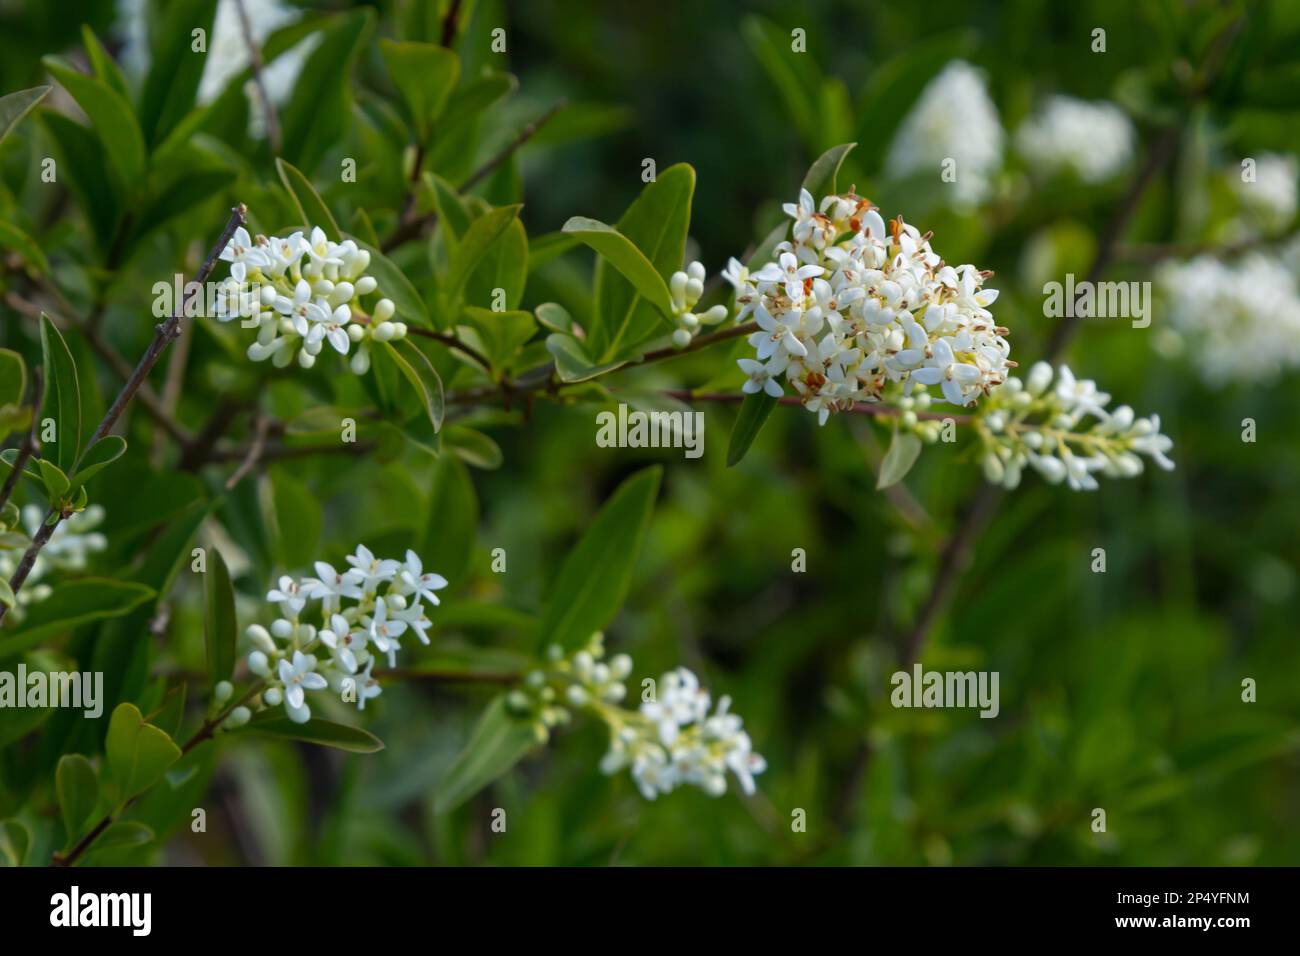 Ligustrum vulgare wild european privet white flowering plant, group of scented flowers in bloom on shrub branches, green leaves. Stock Photo